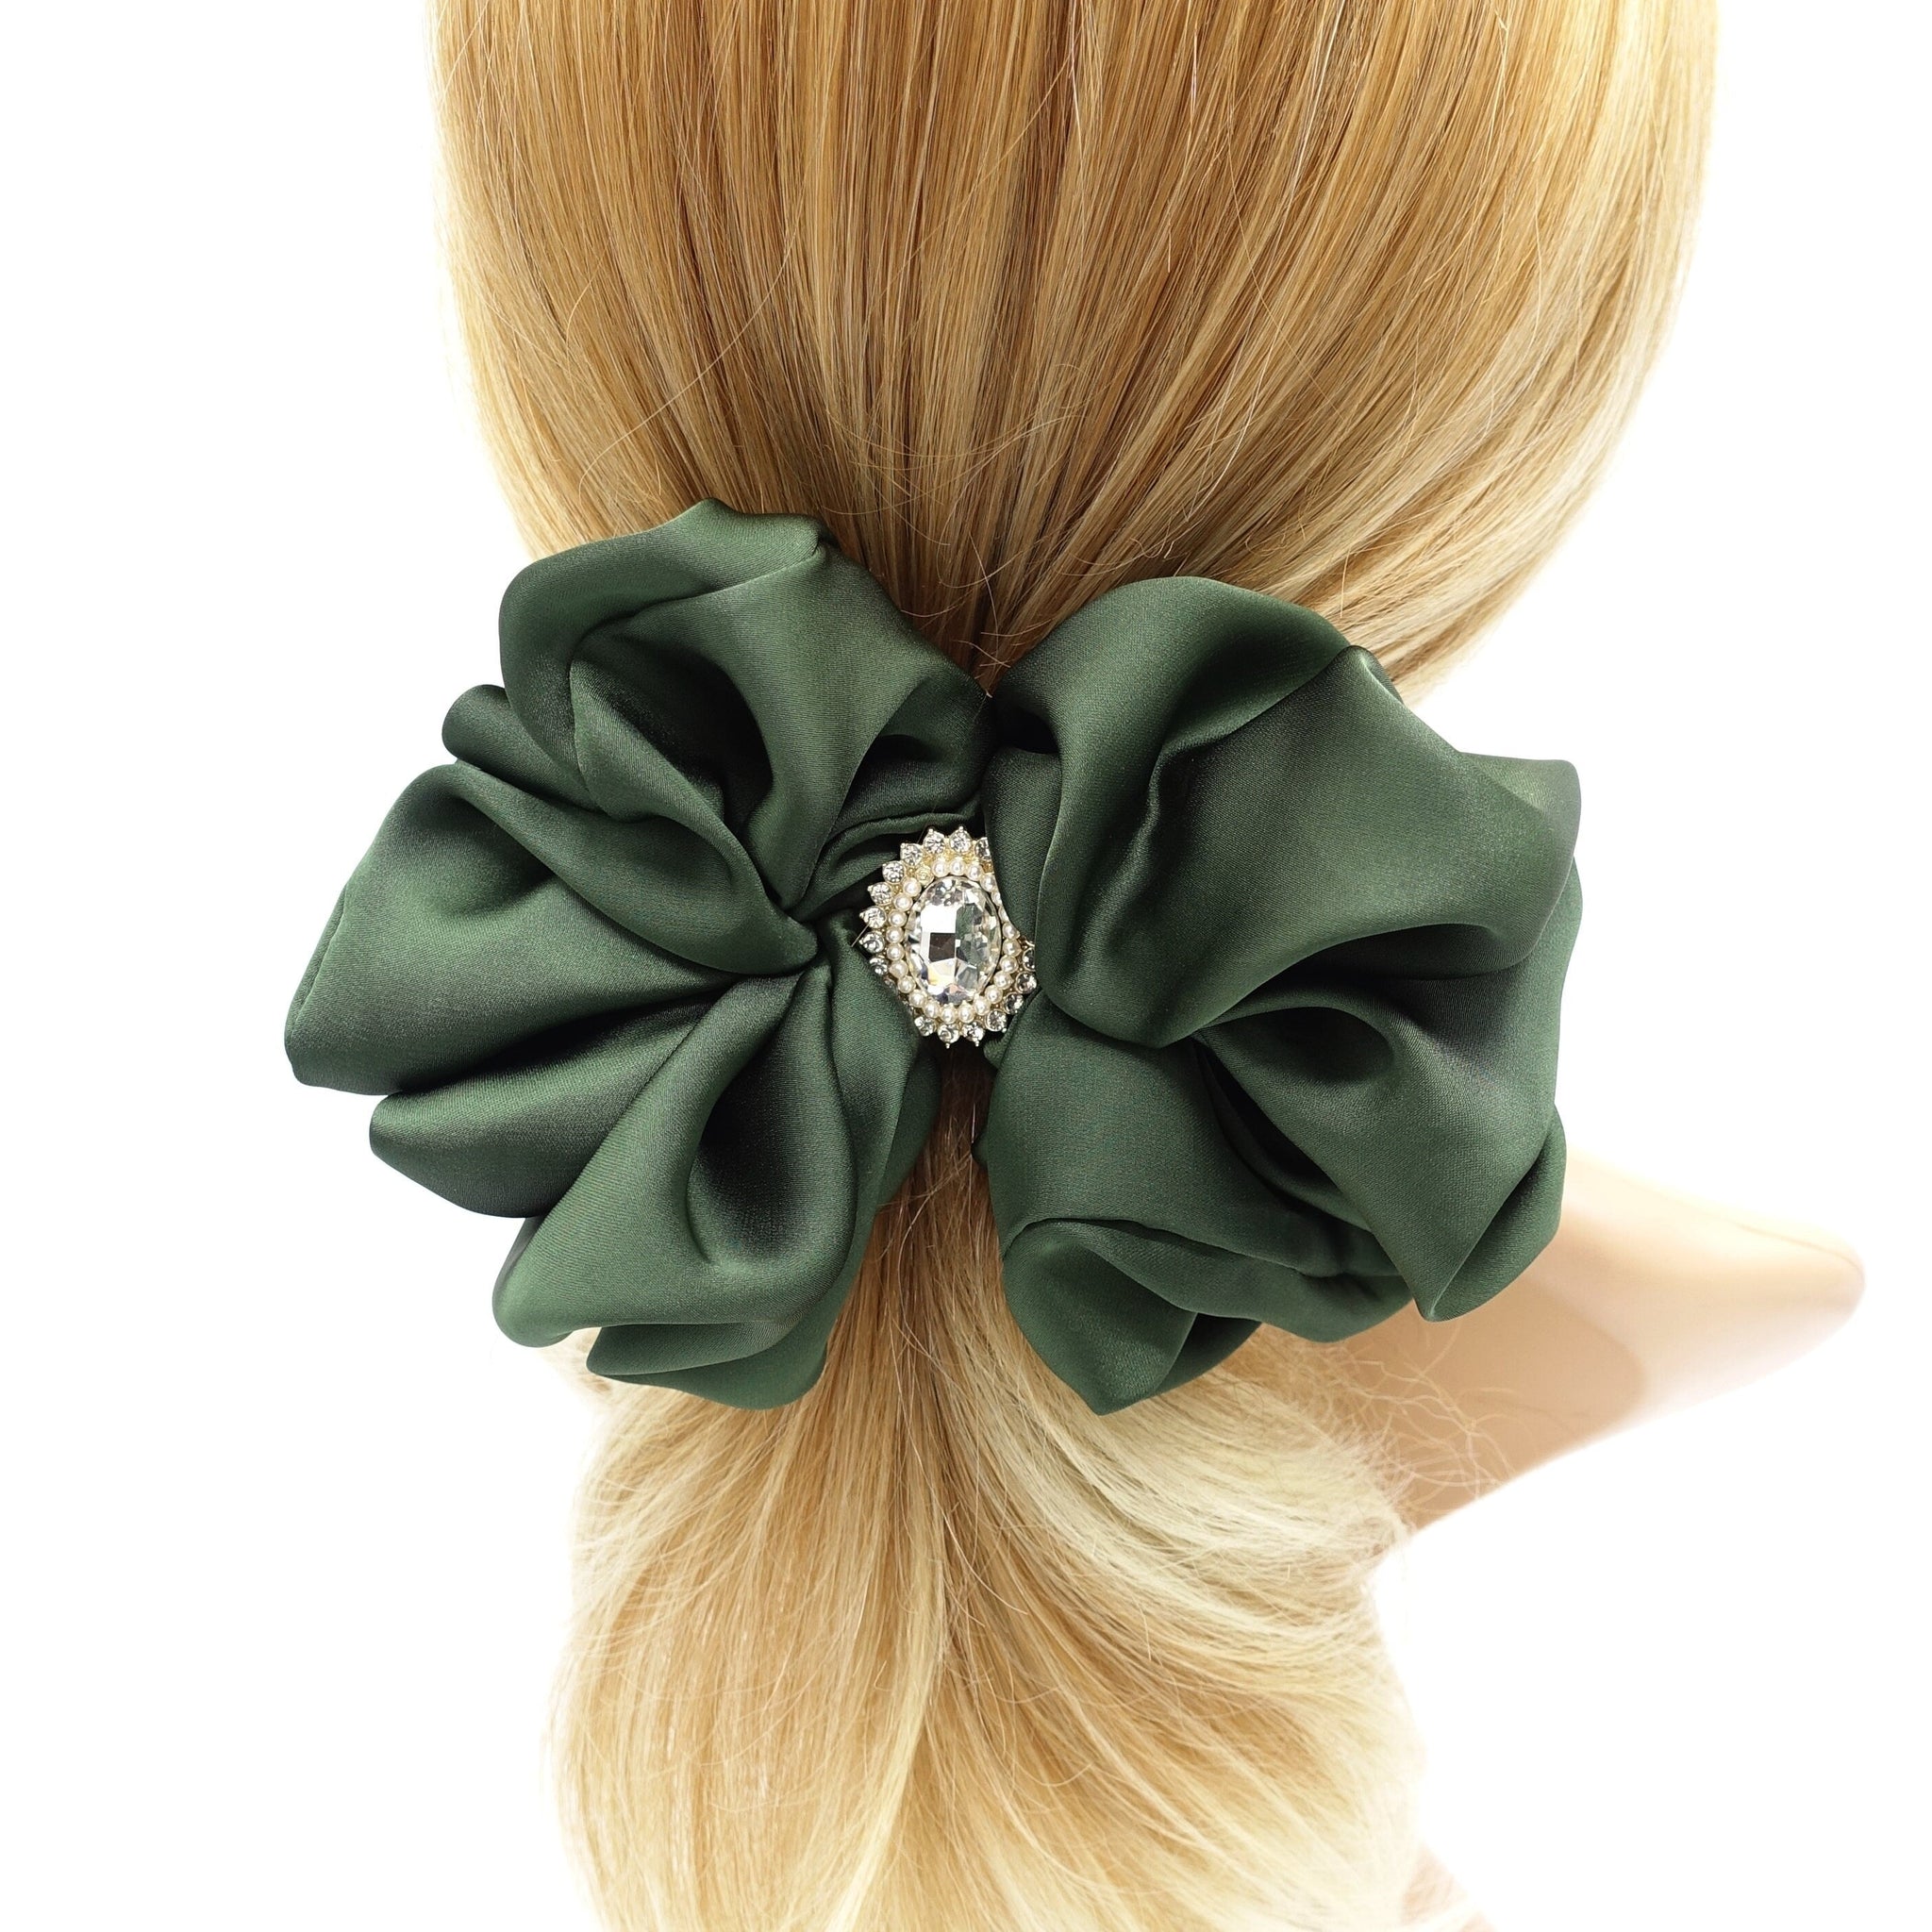 veryshine.com Barrette (Bow) Green satin ruffle hair barrette, rhinestone hair barrette for women